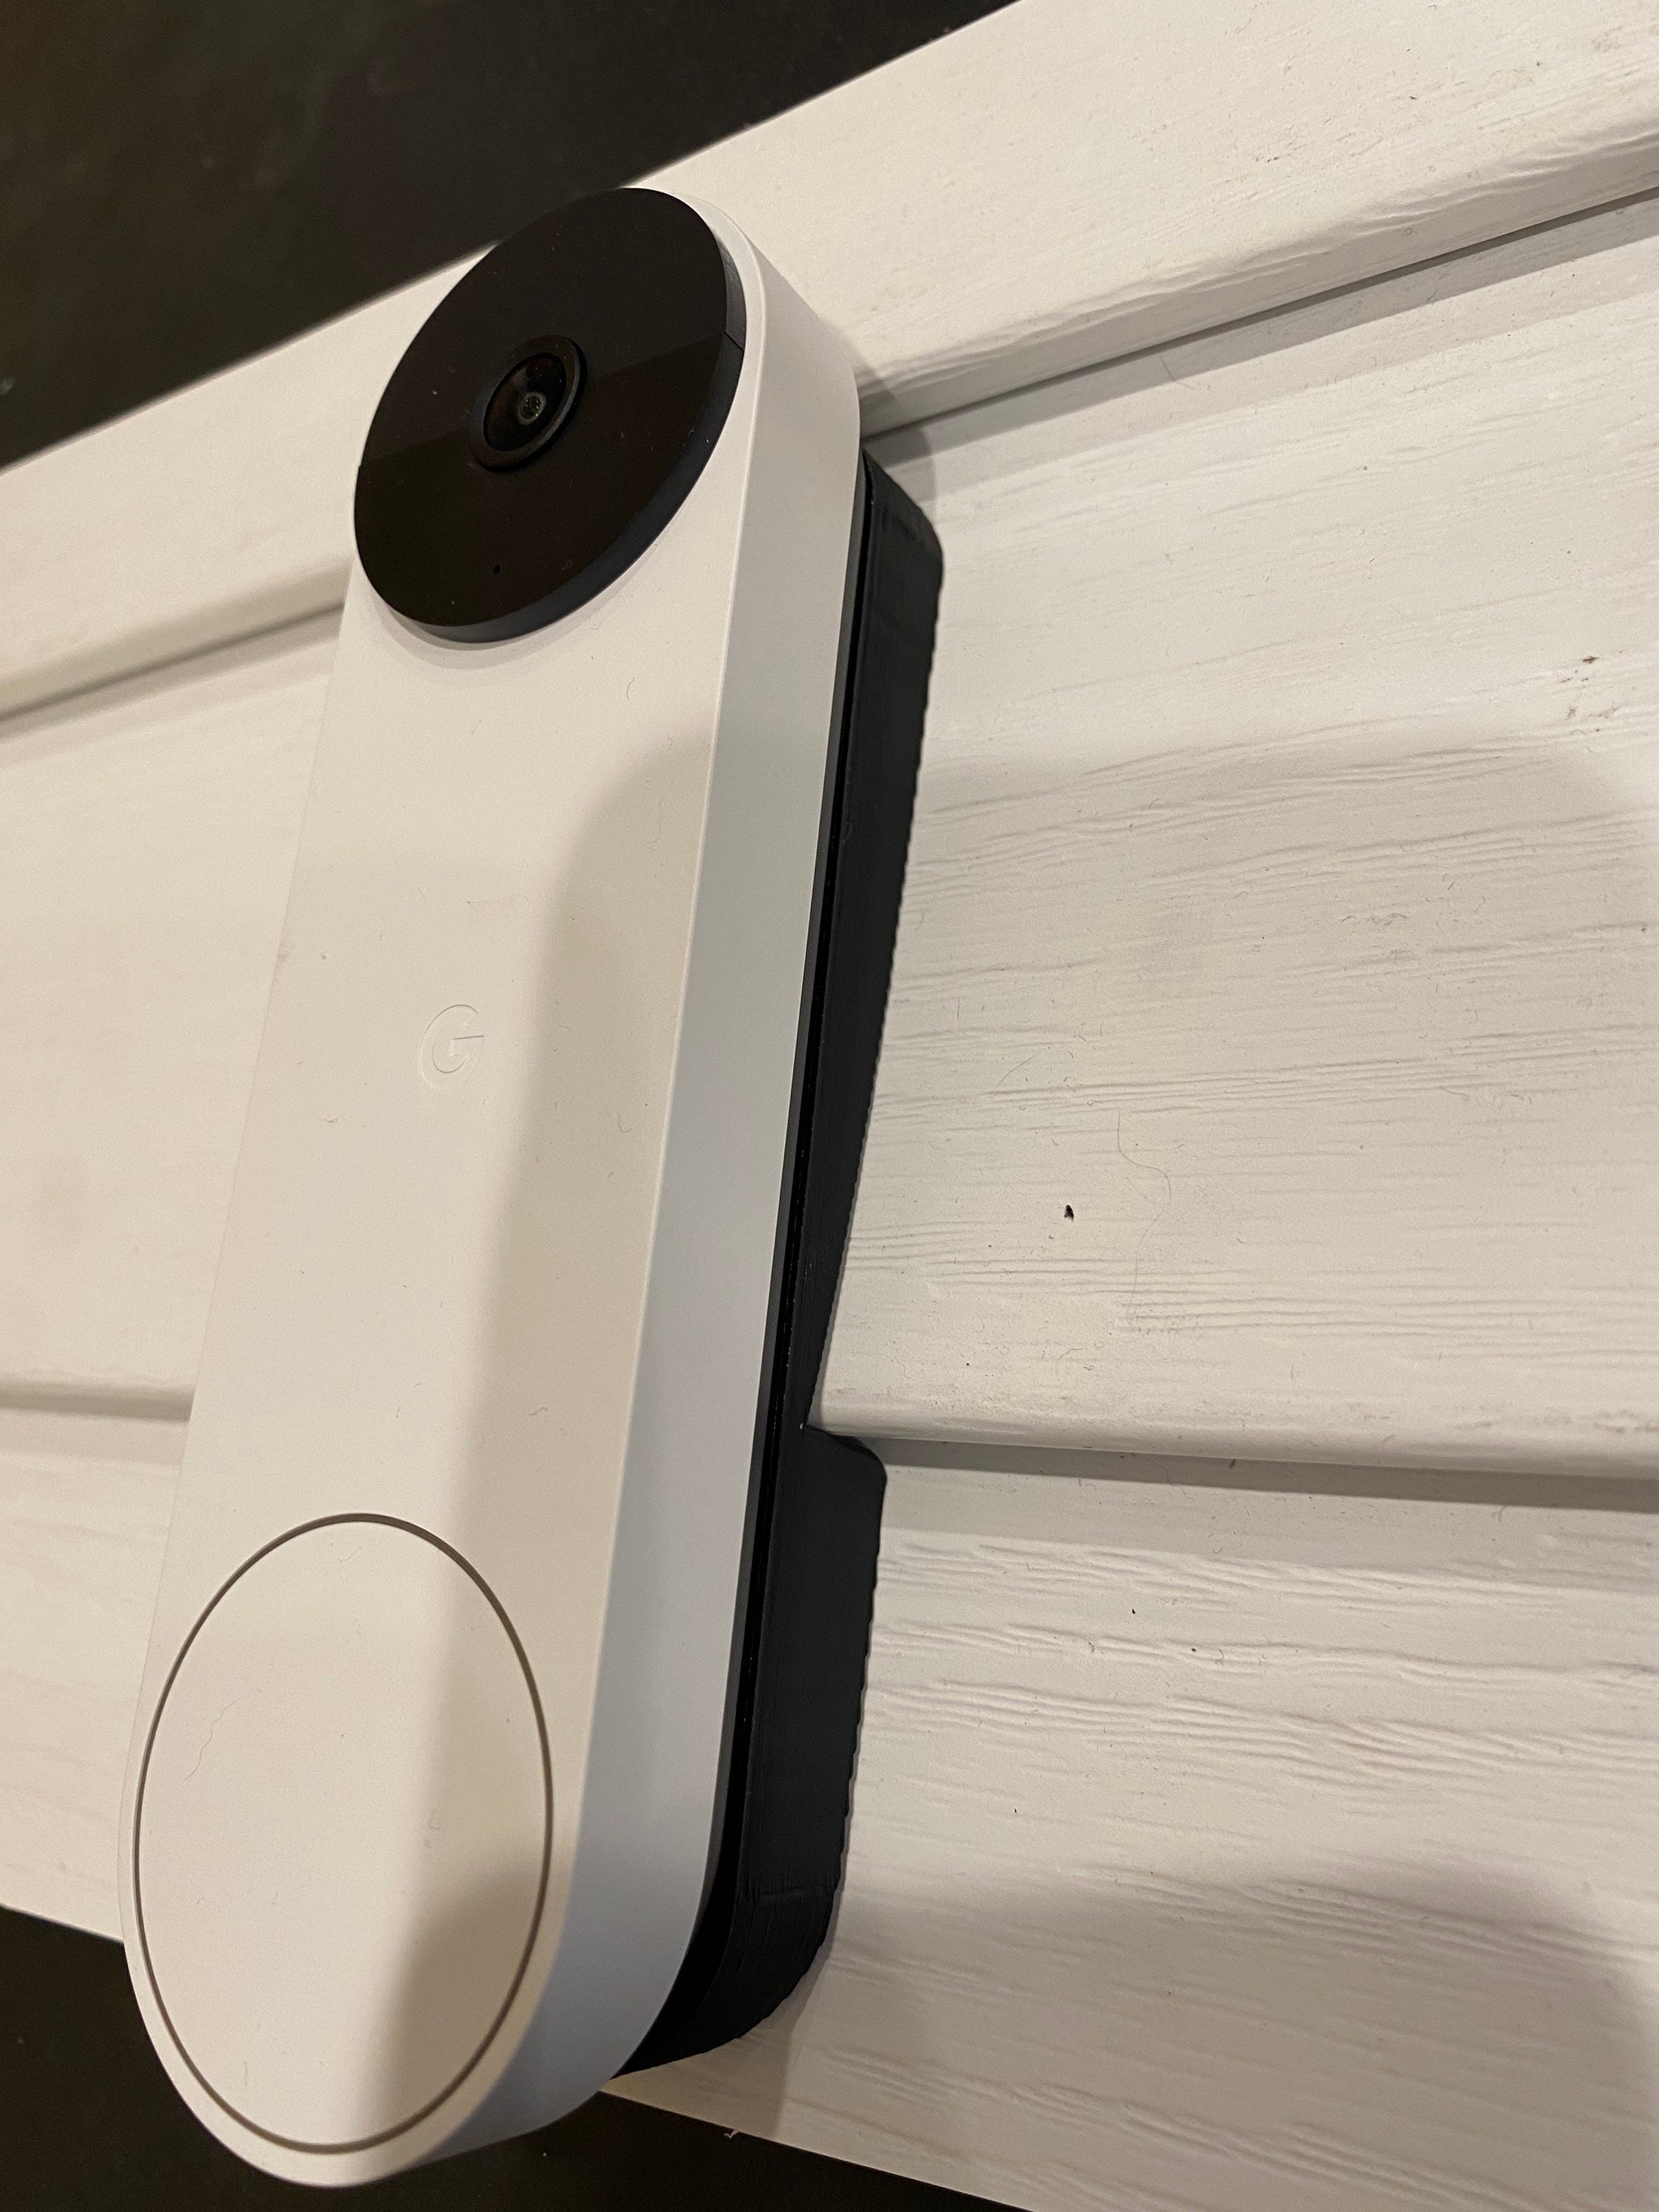 Blink Doorbell Camera Mount Spacer for Dutchlap Vinyl Siding, Dutch Lap  Custom Doorbell Mount Improves Security Video Camera Angle 